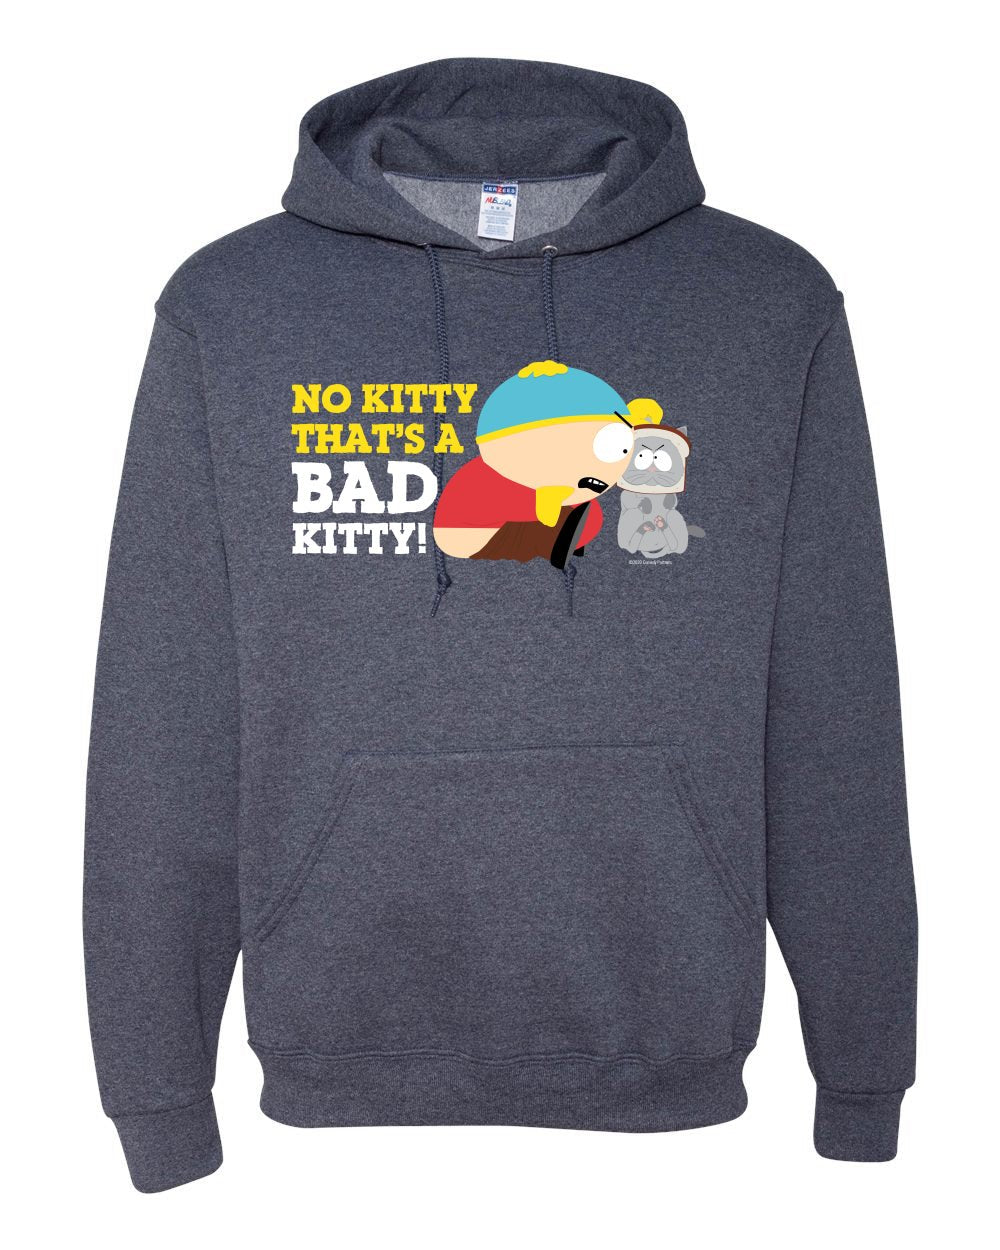 South Park Cartman Bad Kitty Graphic Hooded Sweatshirt - Paramount Shop